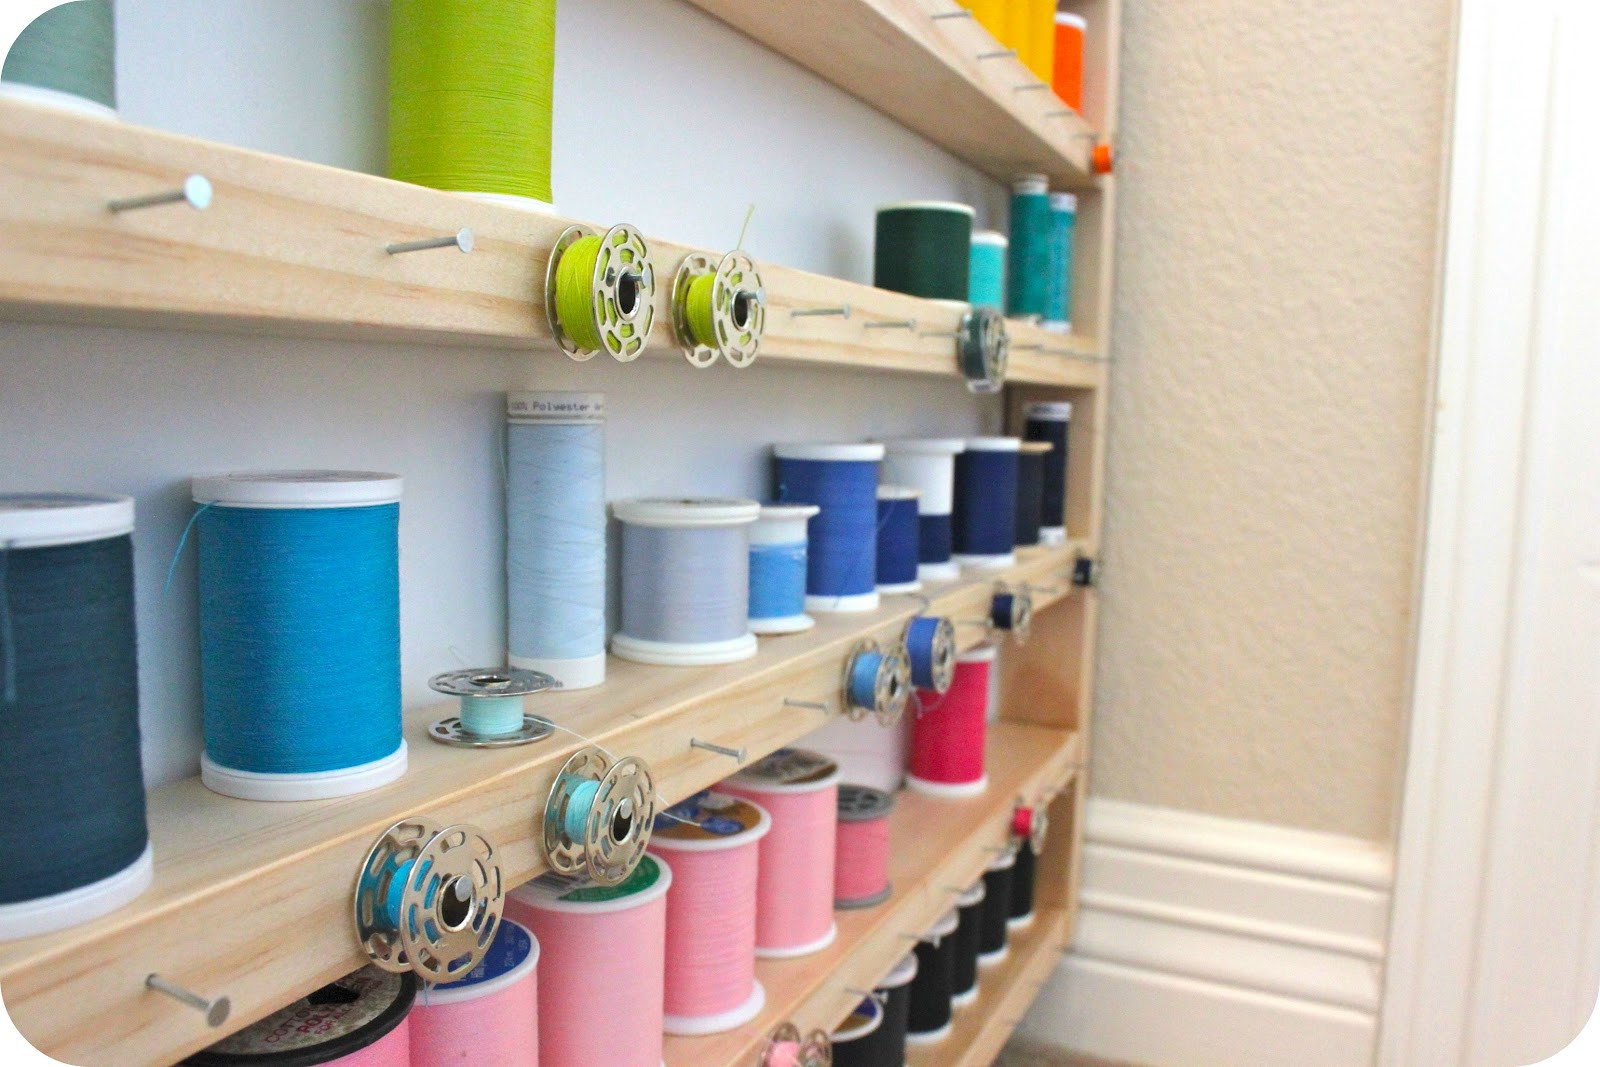 Best ideas about DIY Thread Organizer
. Save or Pin Sewing Over Pins Tutorial DIY Thread Spool & Bobbin Storage Now.